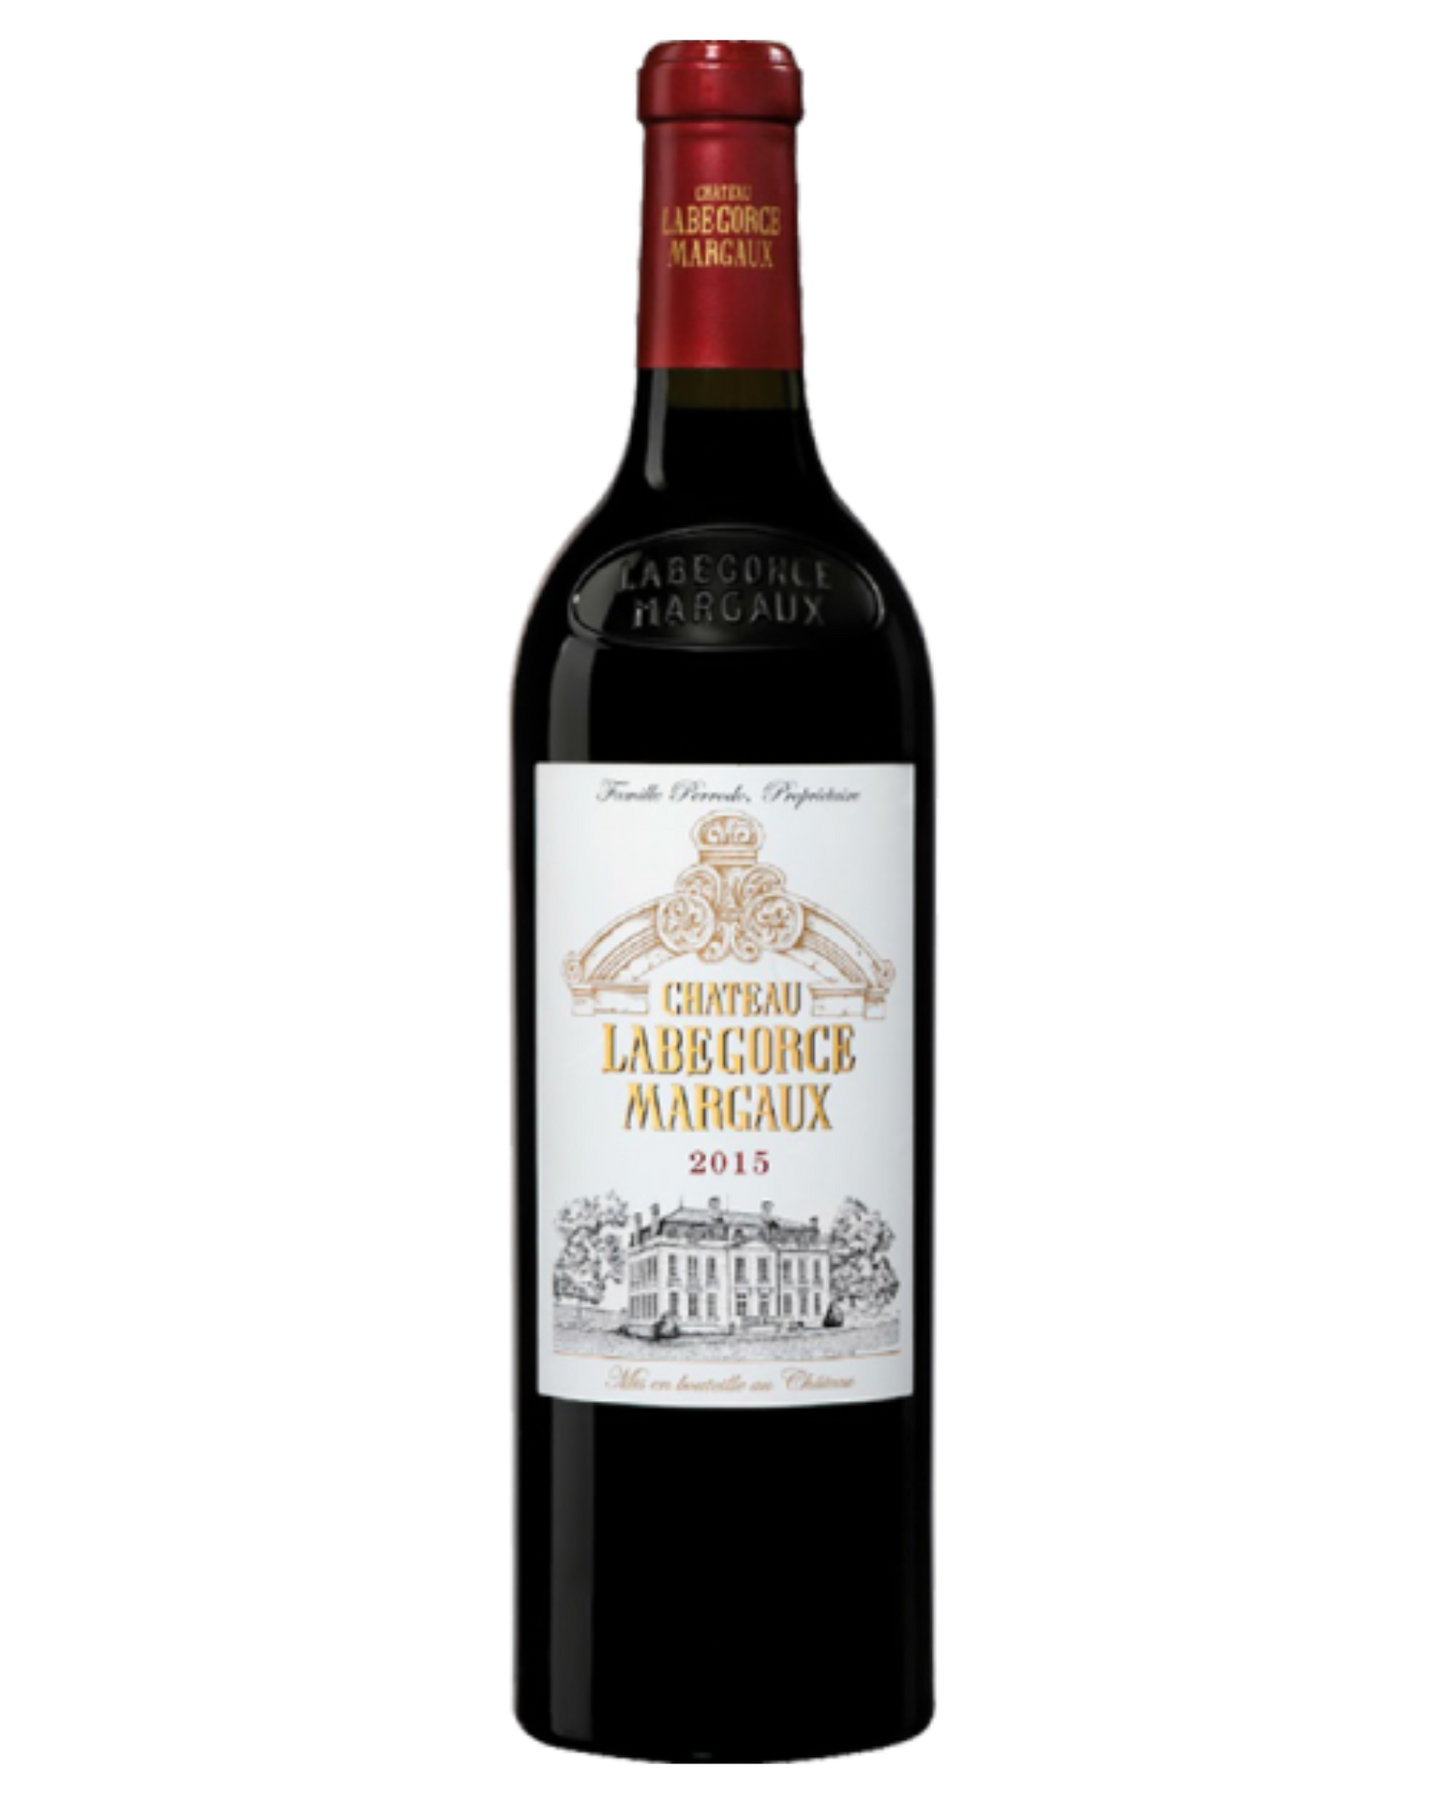 Chateau Labegorce Margaux 2015 - Premium Red Wine from Chateau Labegorce Margaux - Shop now at Whiskery